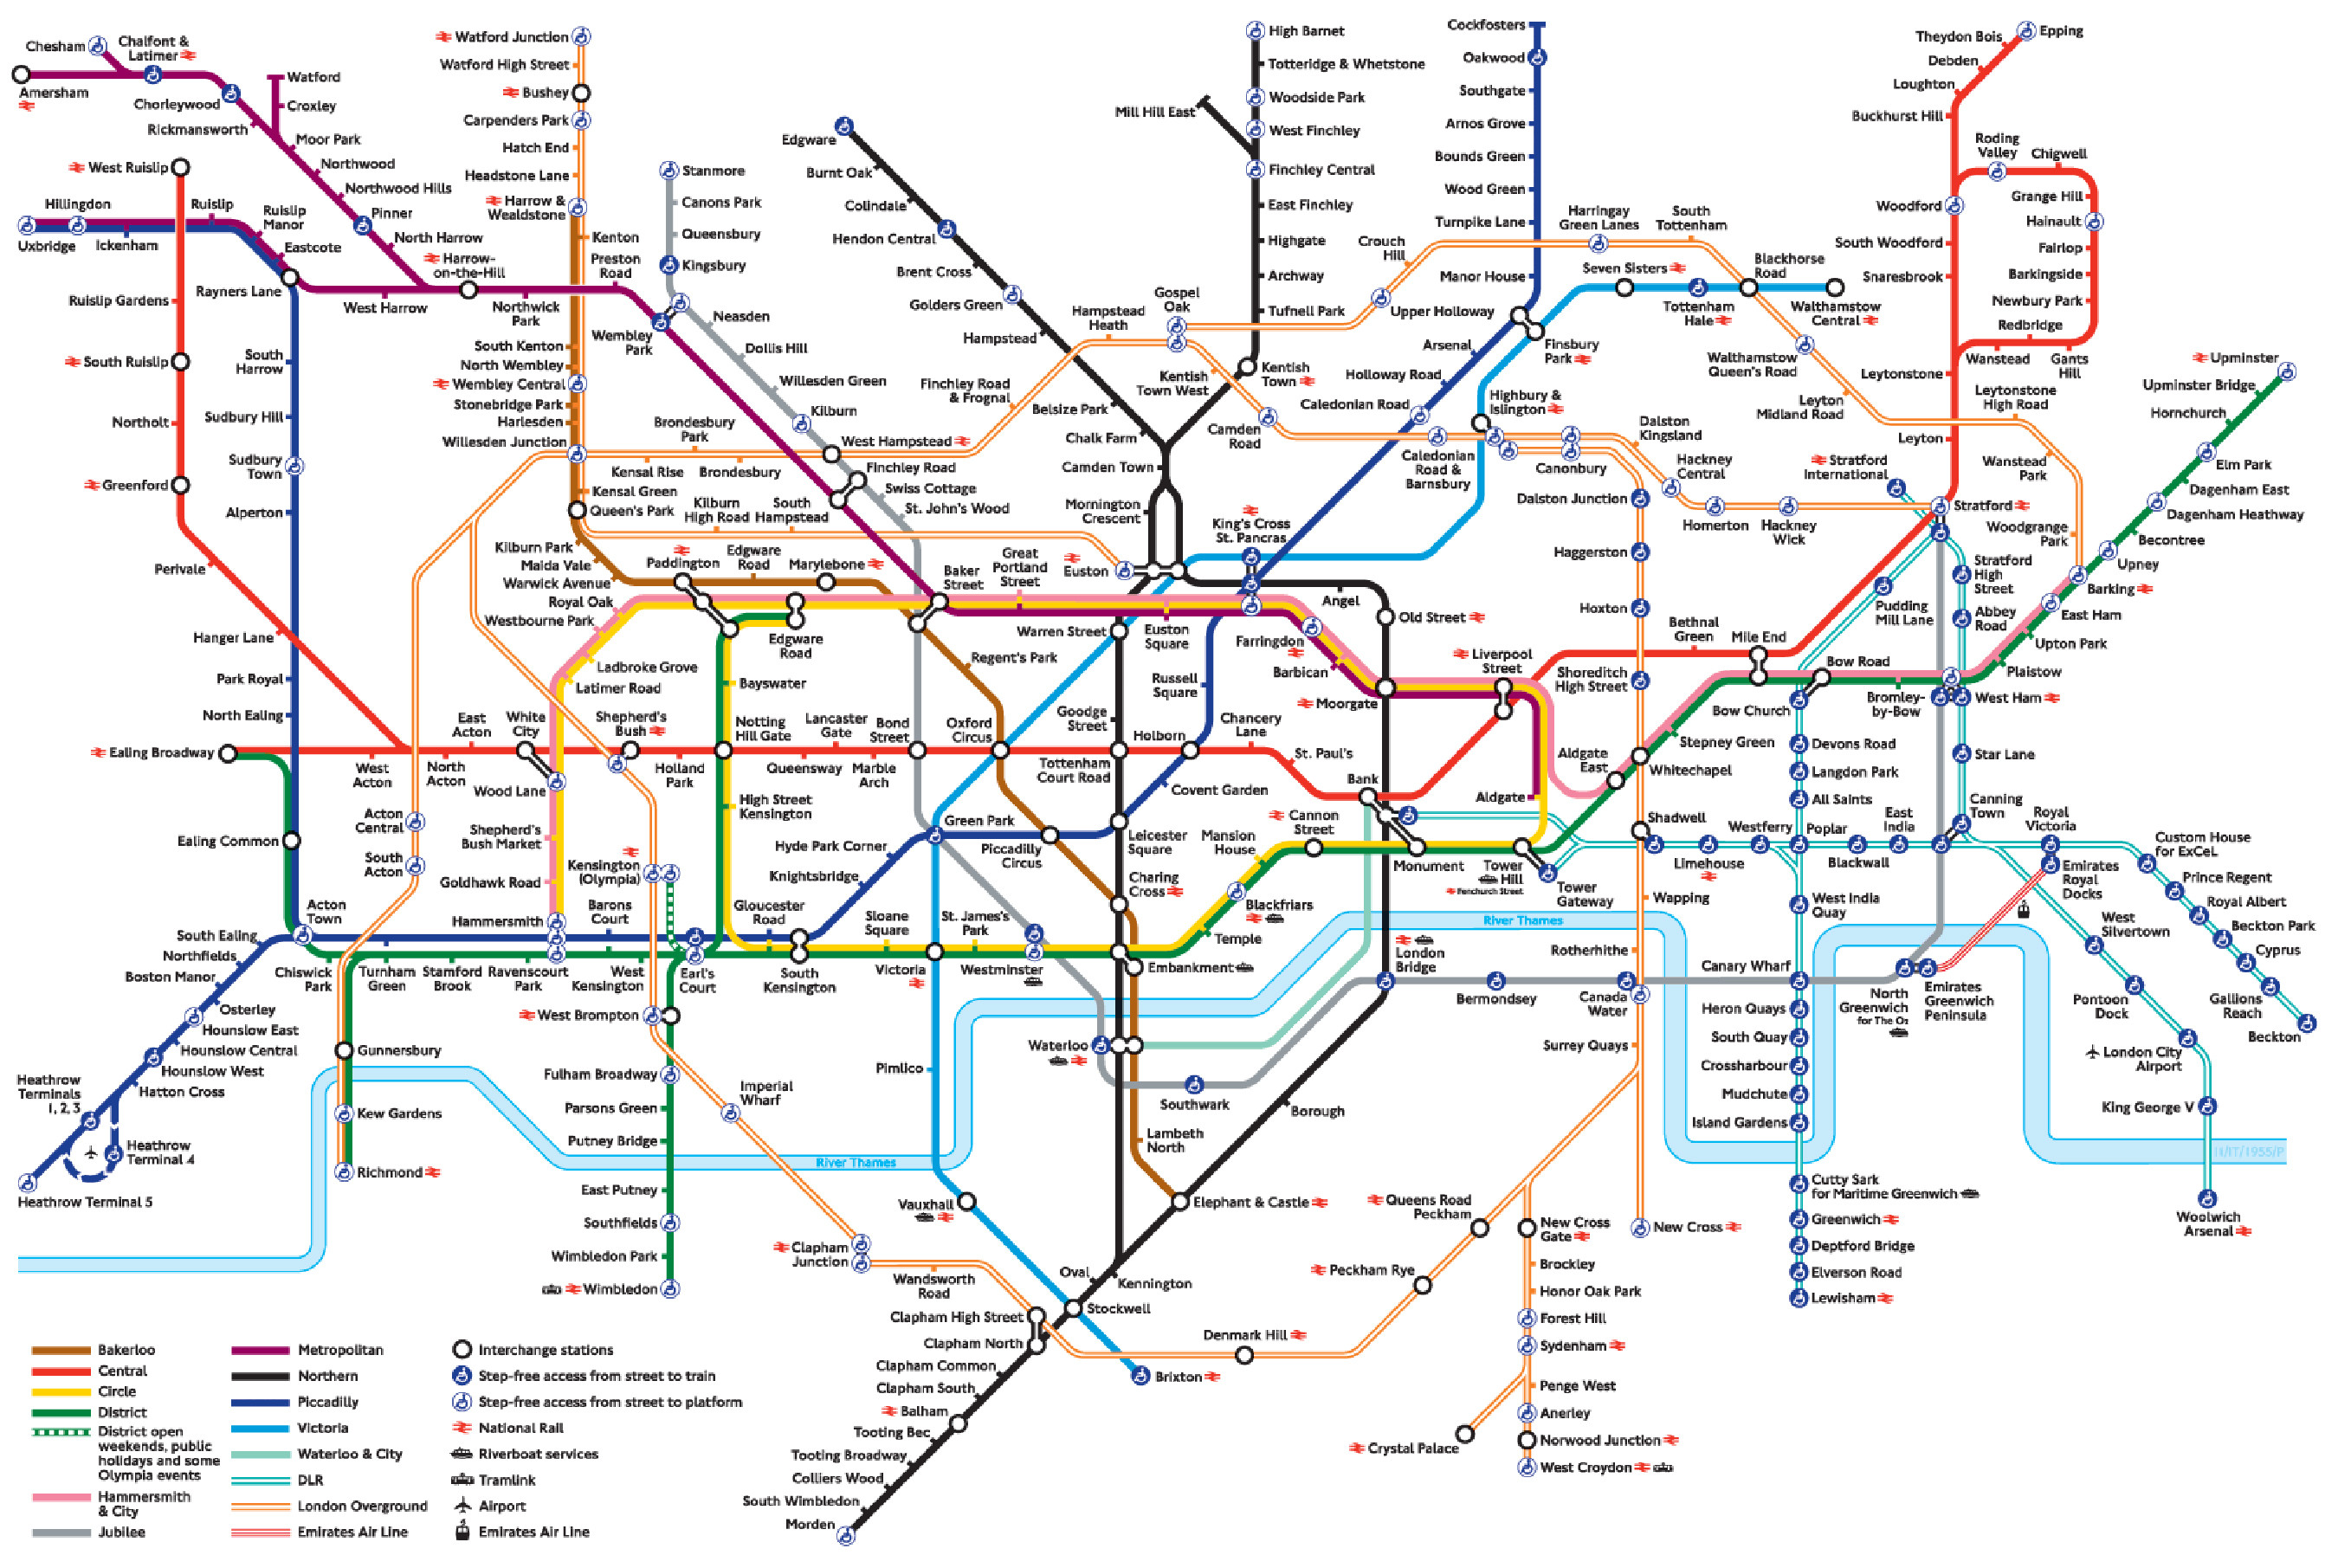 london-underground-tube-map-search-tube-london-underground